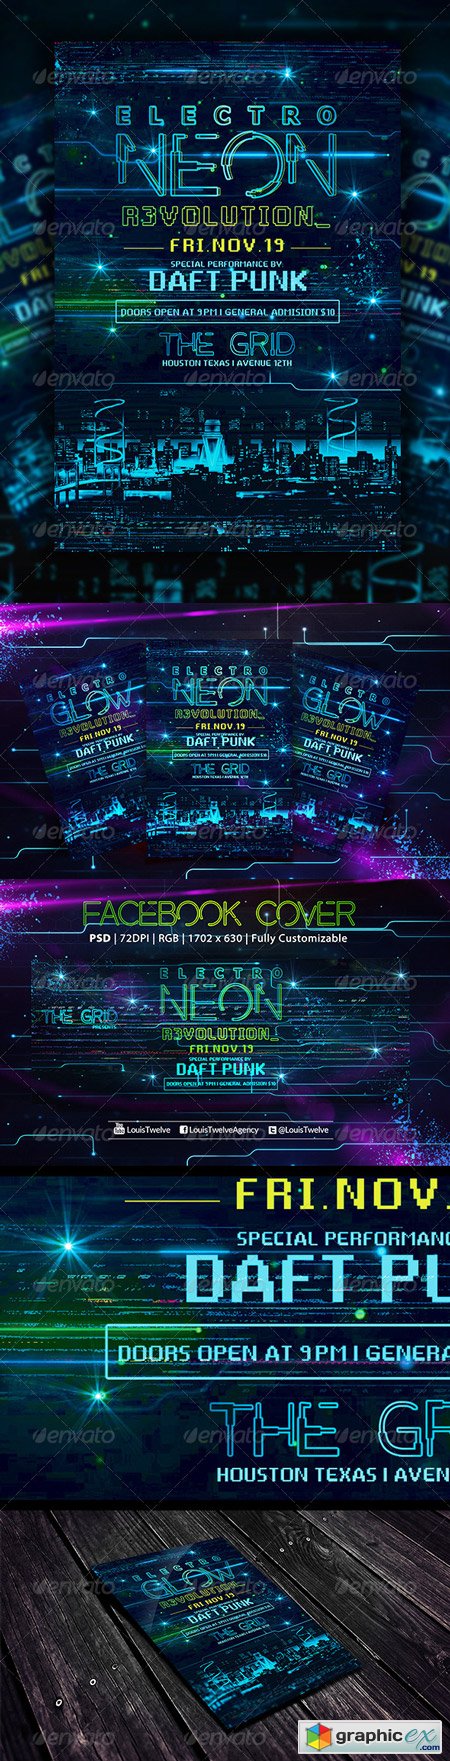 Electro Neon Flyer + Fb Cover